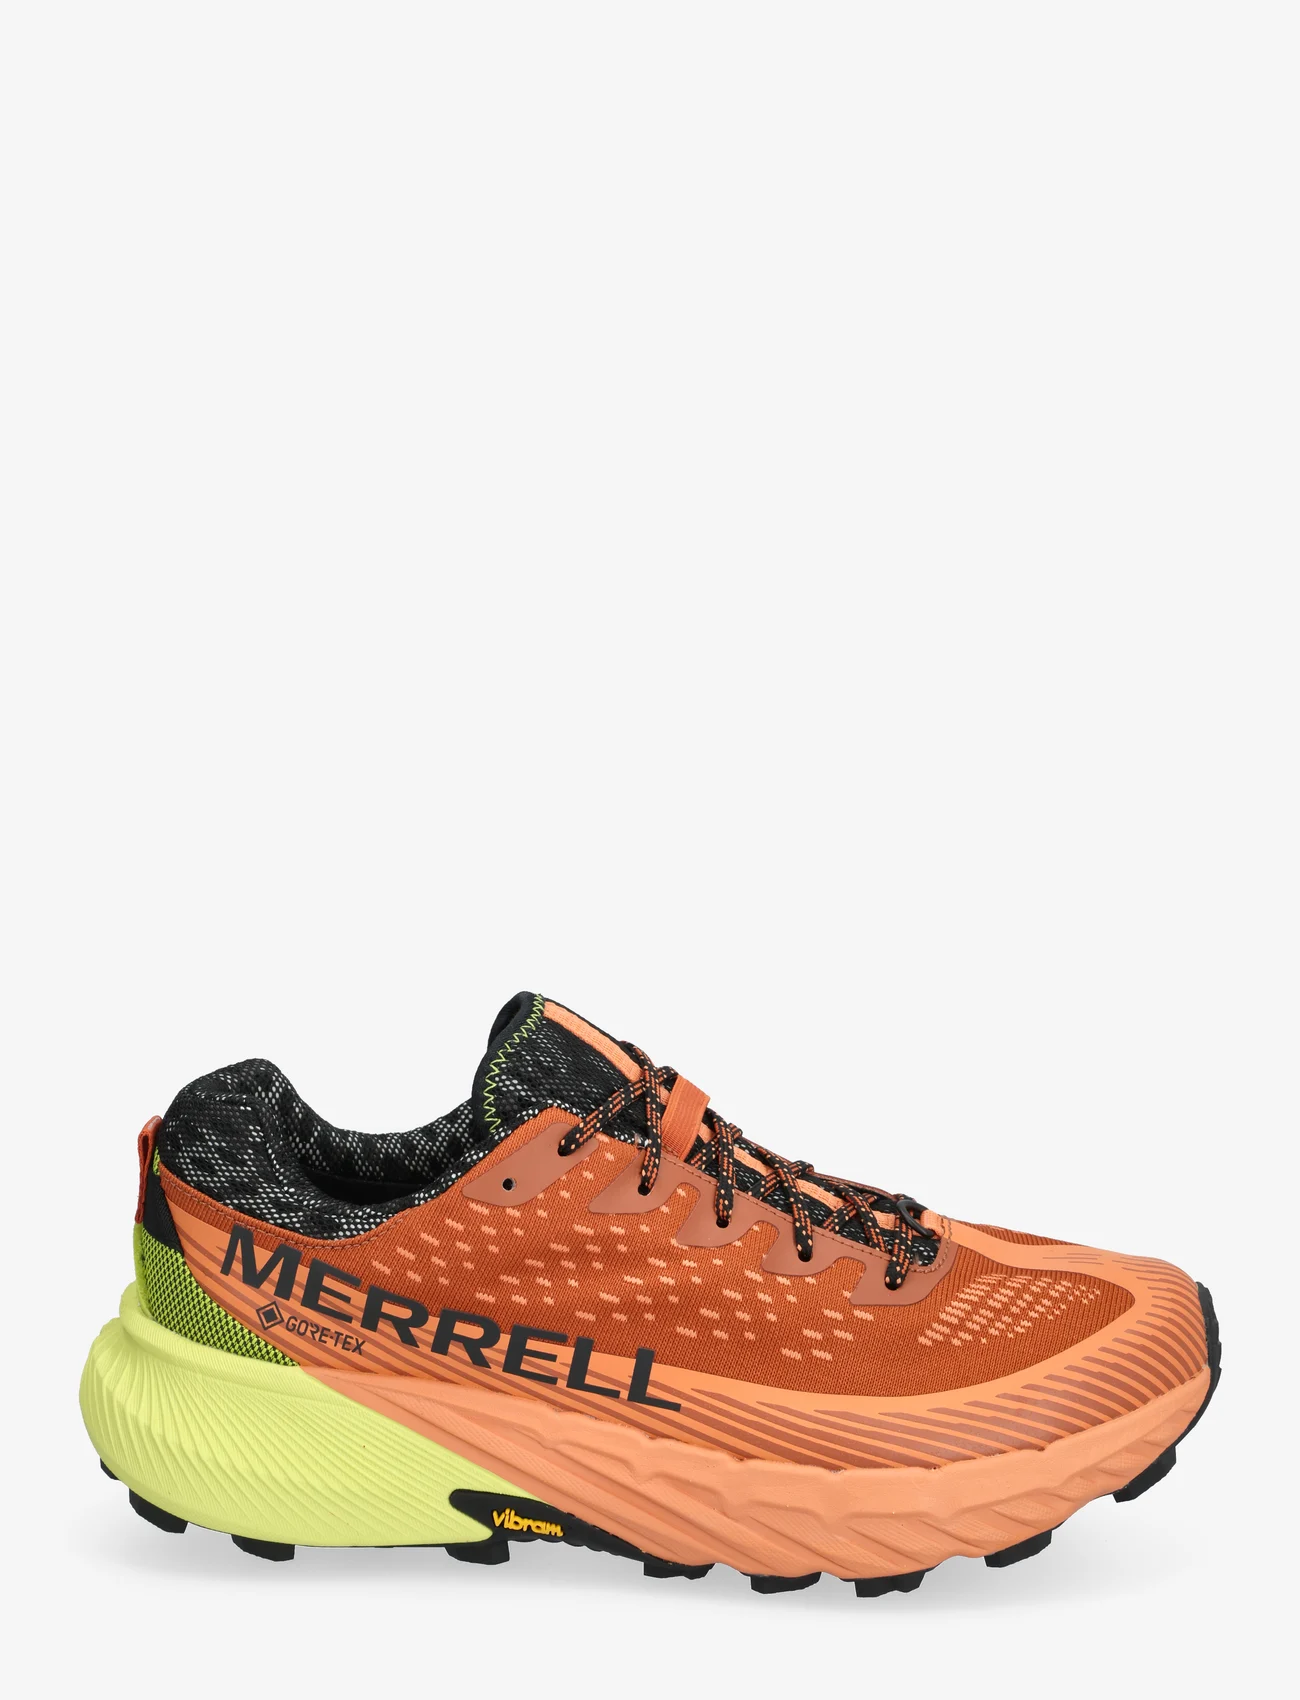 Merrell - Men's Agility Peak 5 GTX - Clay/Mel - juoksukengät - clay/melon - 1